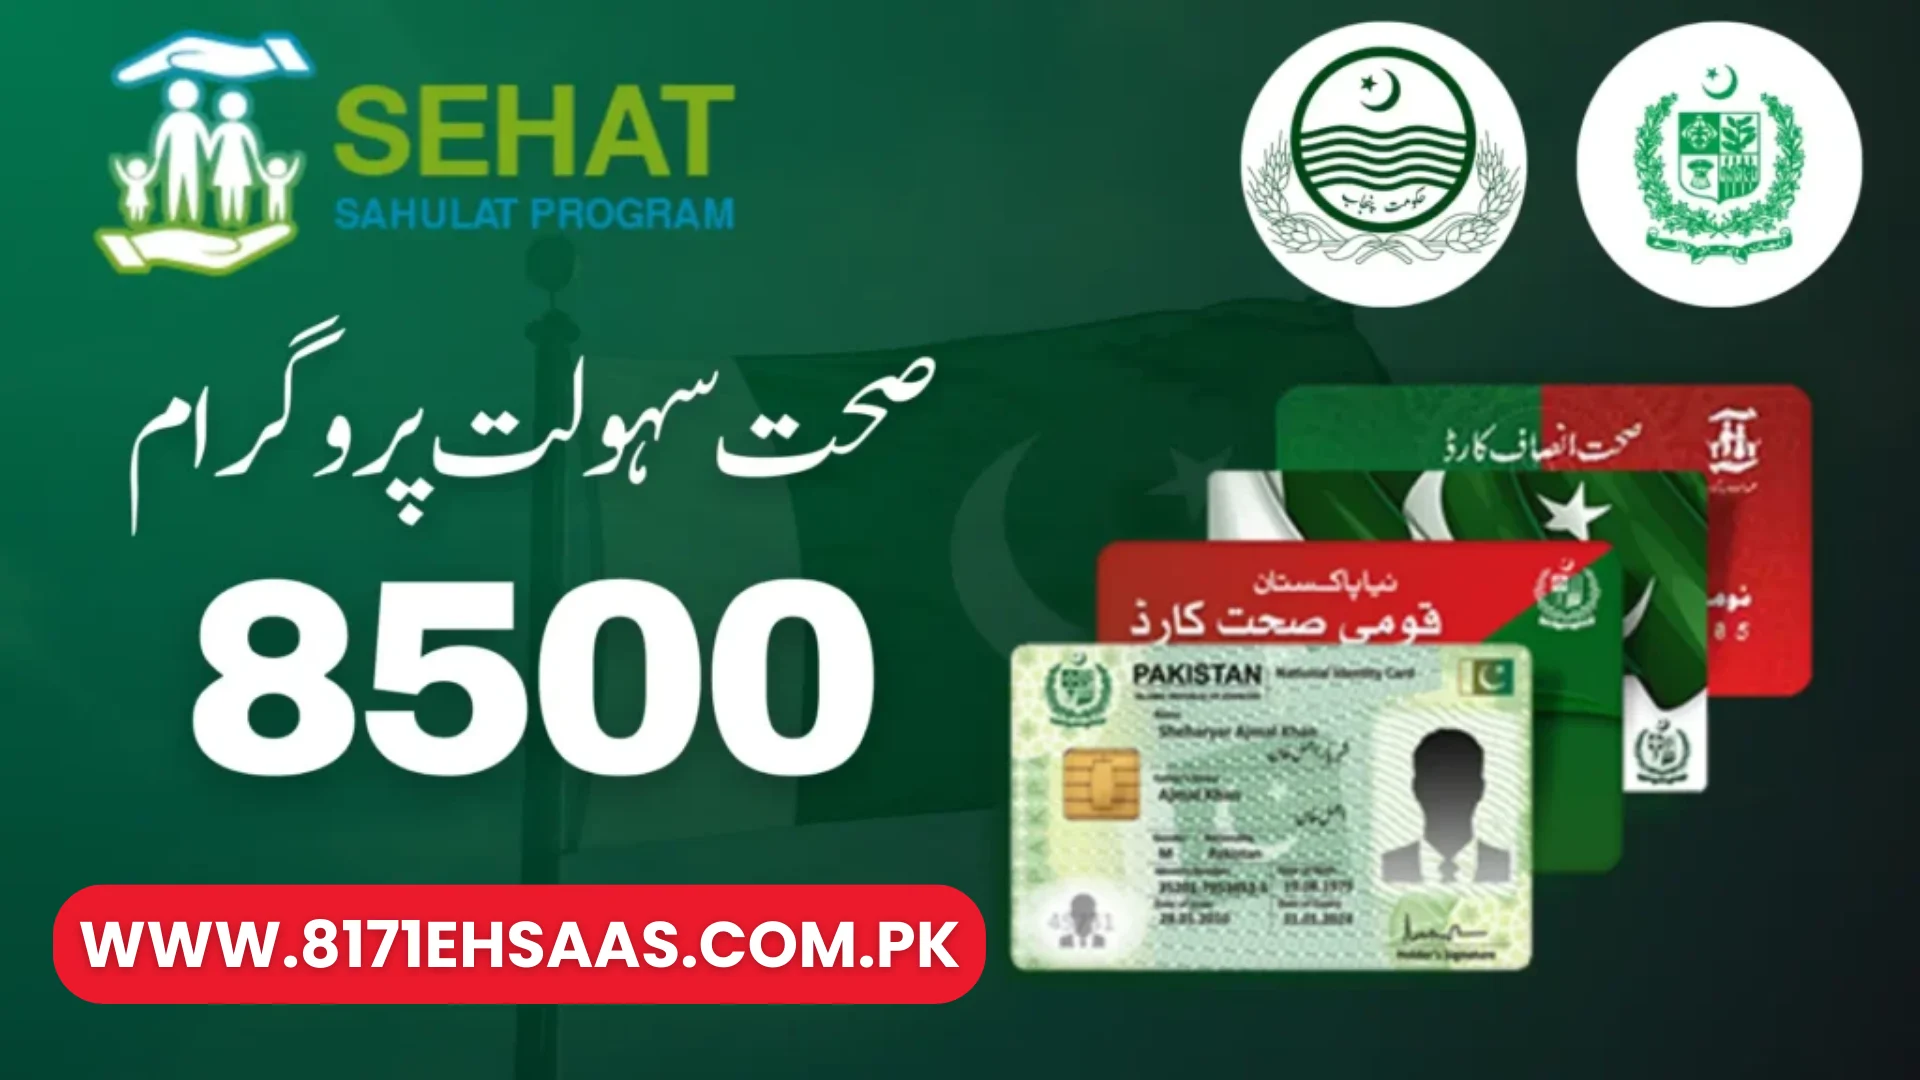 Online Registration of Sehat Sahulat Program